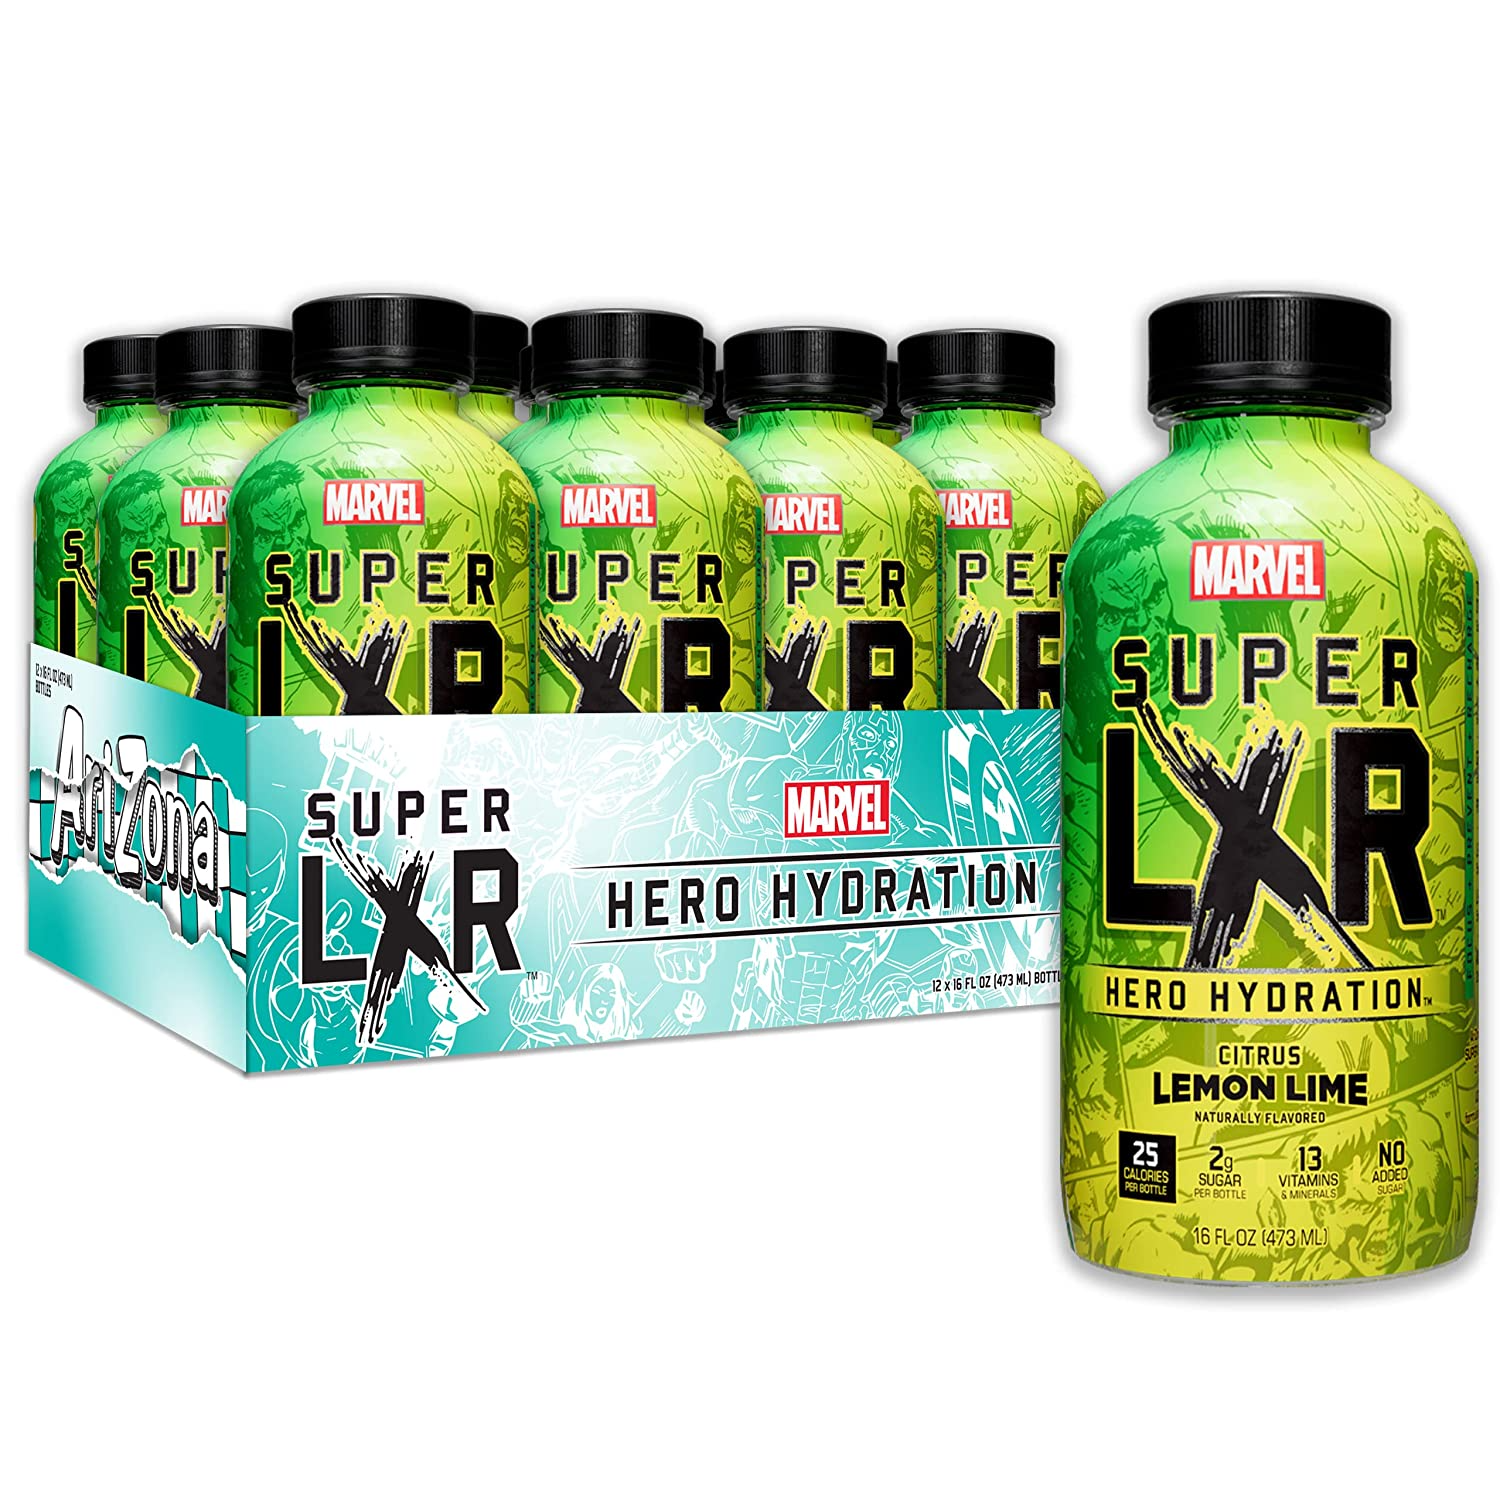 Arizona x Marvel Super LXR Hydration Drink - Citrus Lemon Lime